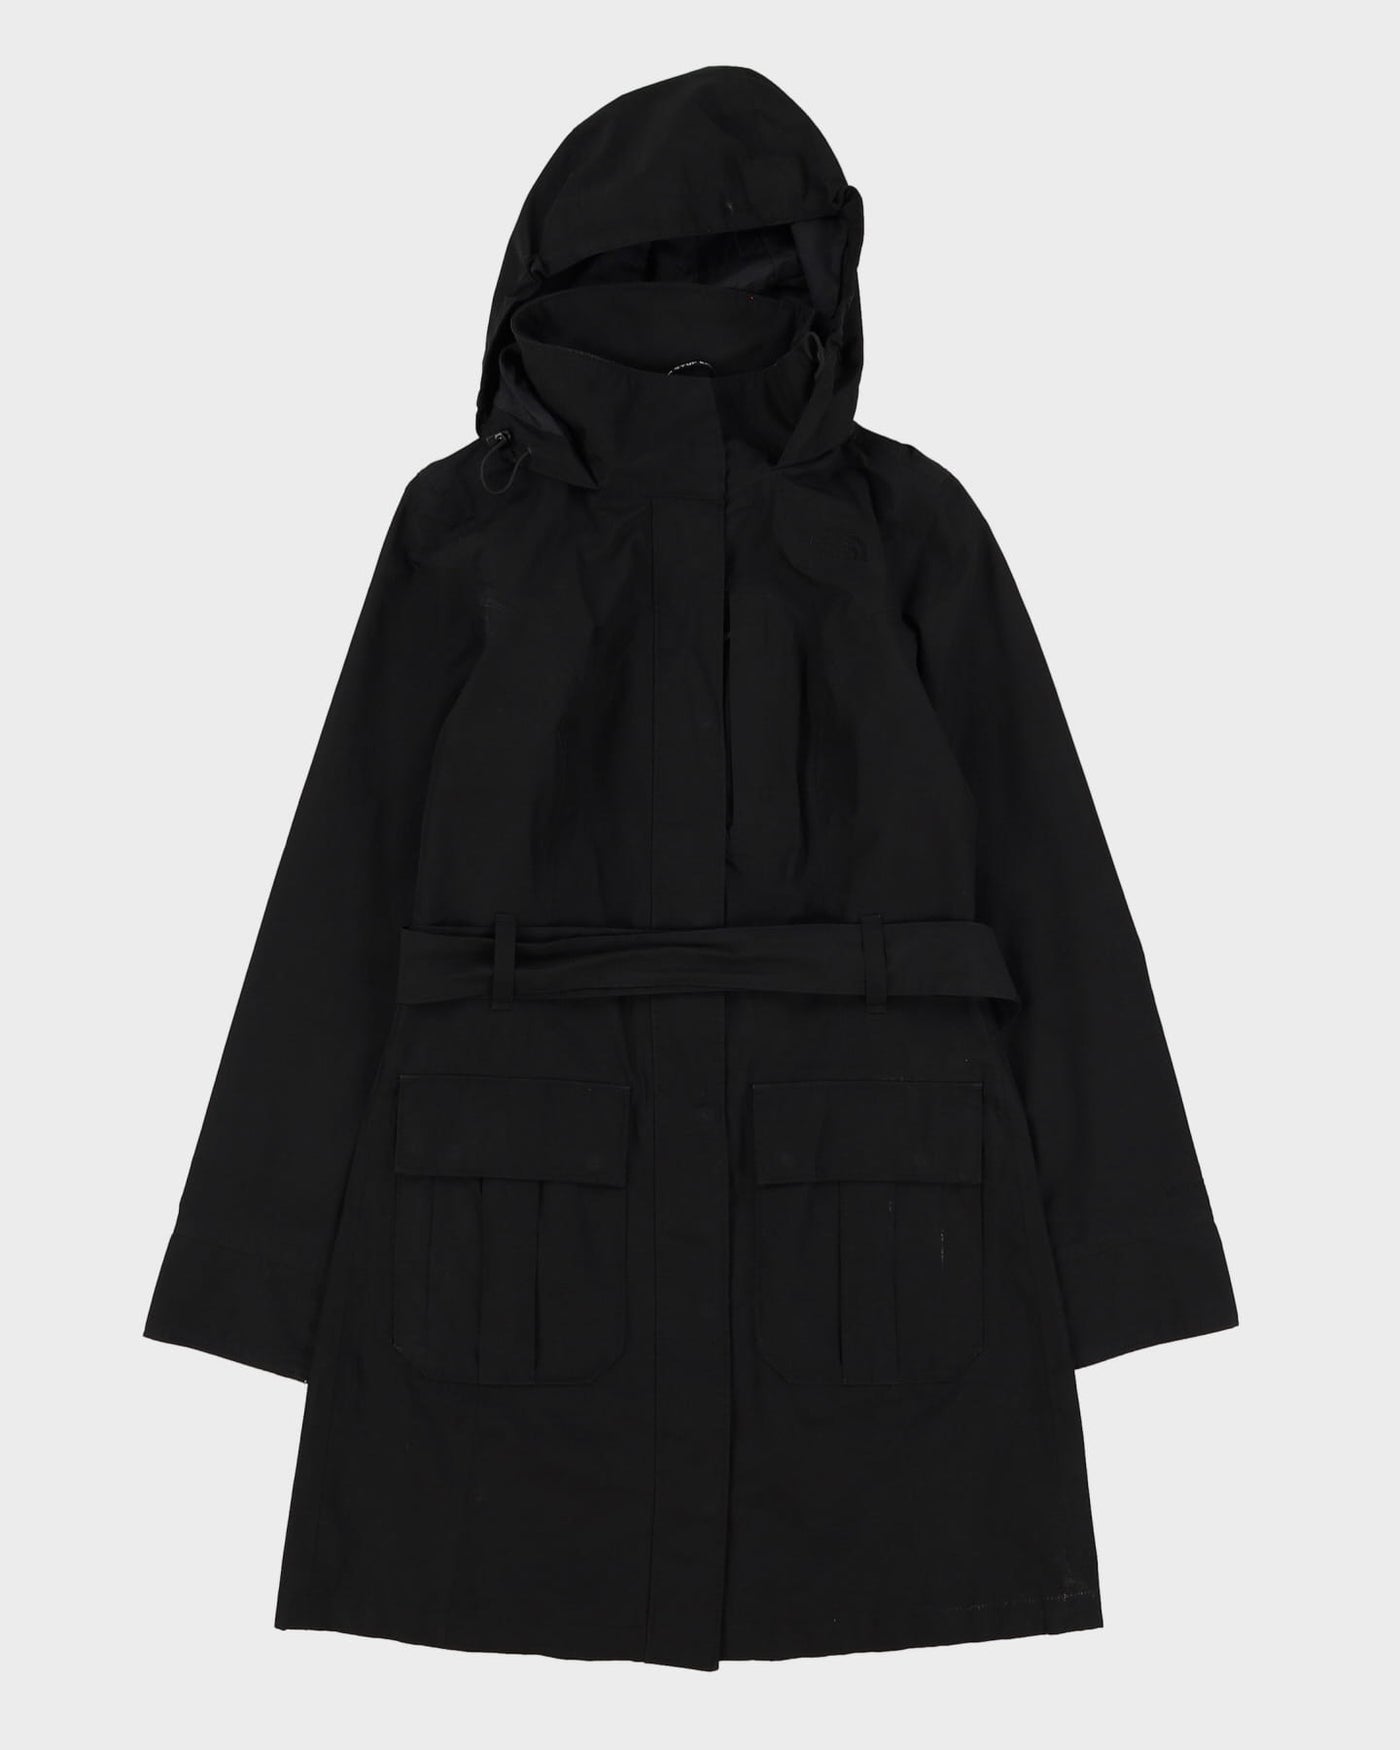 The North Face Black Raincoat - XS